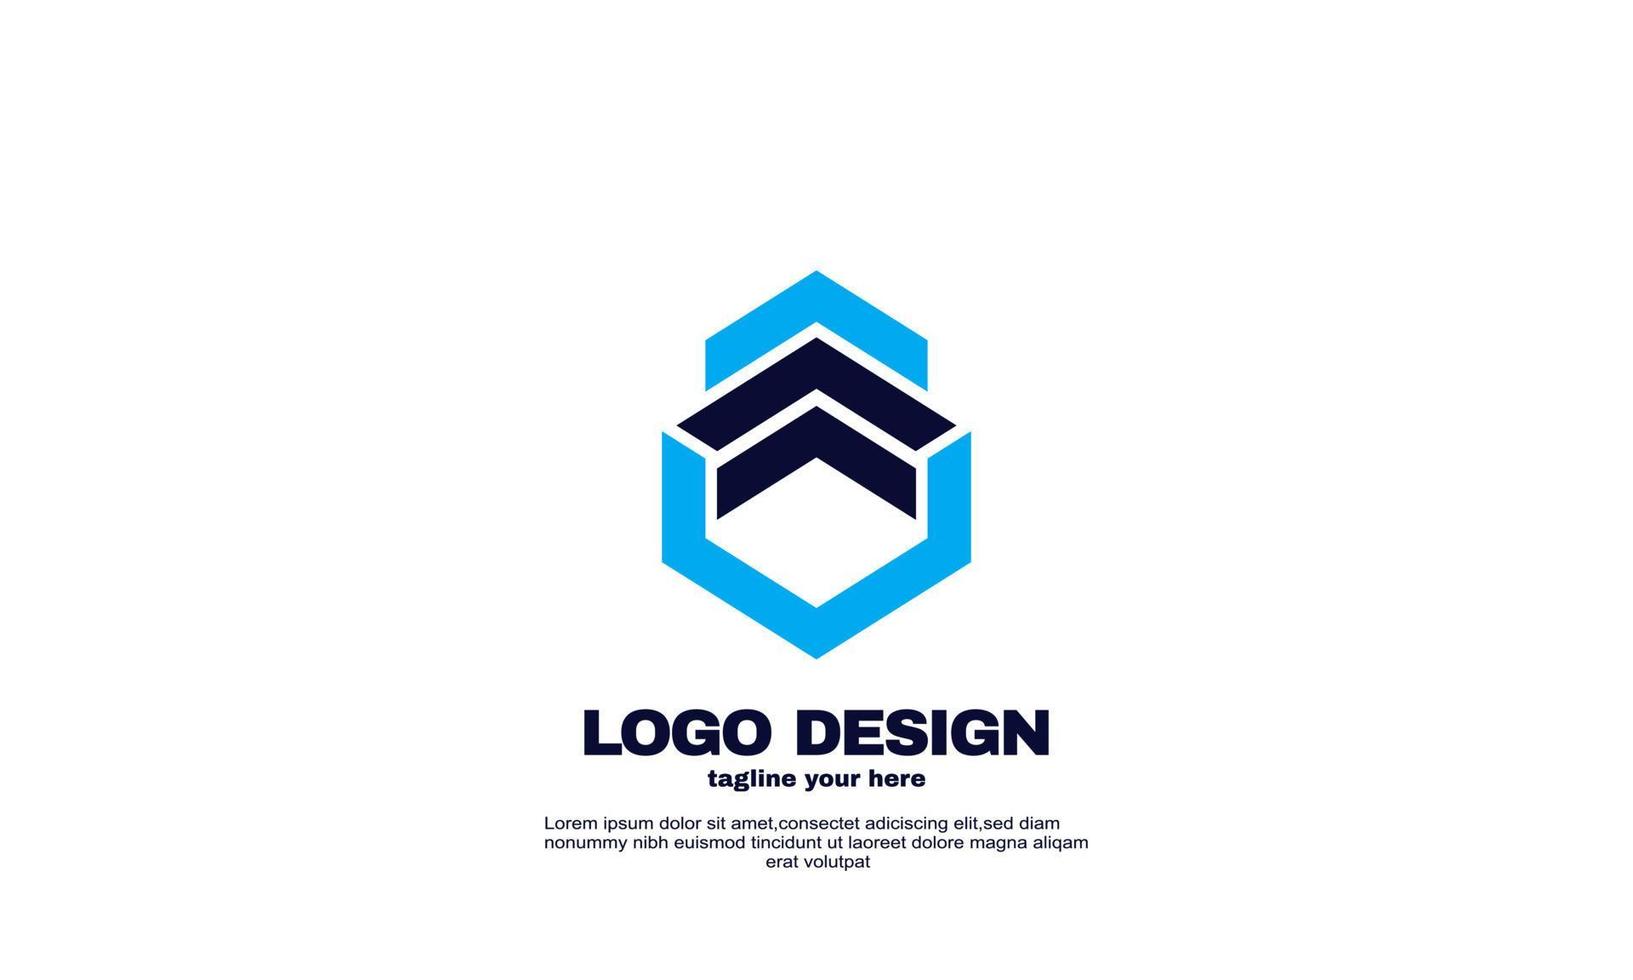 estoque vetor empresa corporativa criativa negócios ideia simples design de hexágono elemento de logotipo modelo de design de identidade de marca